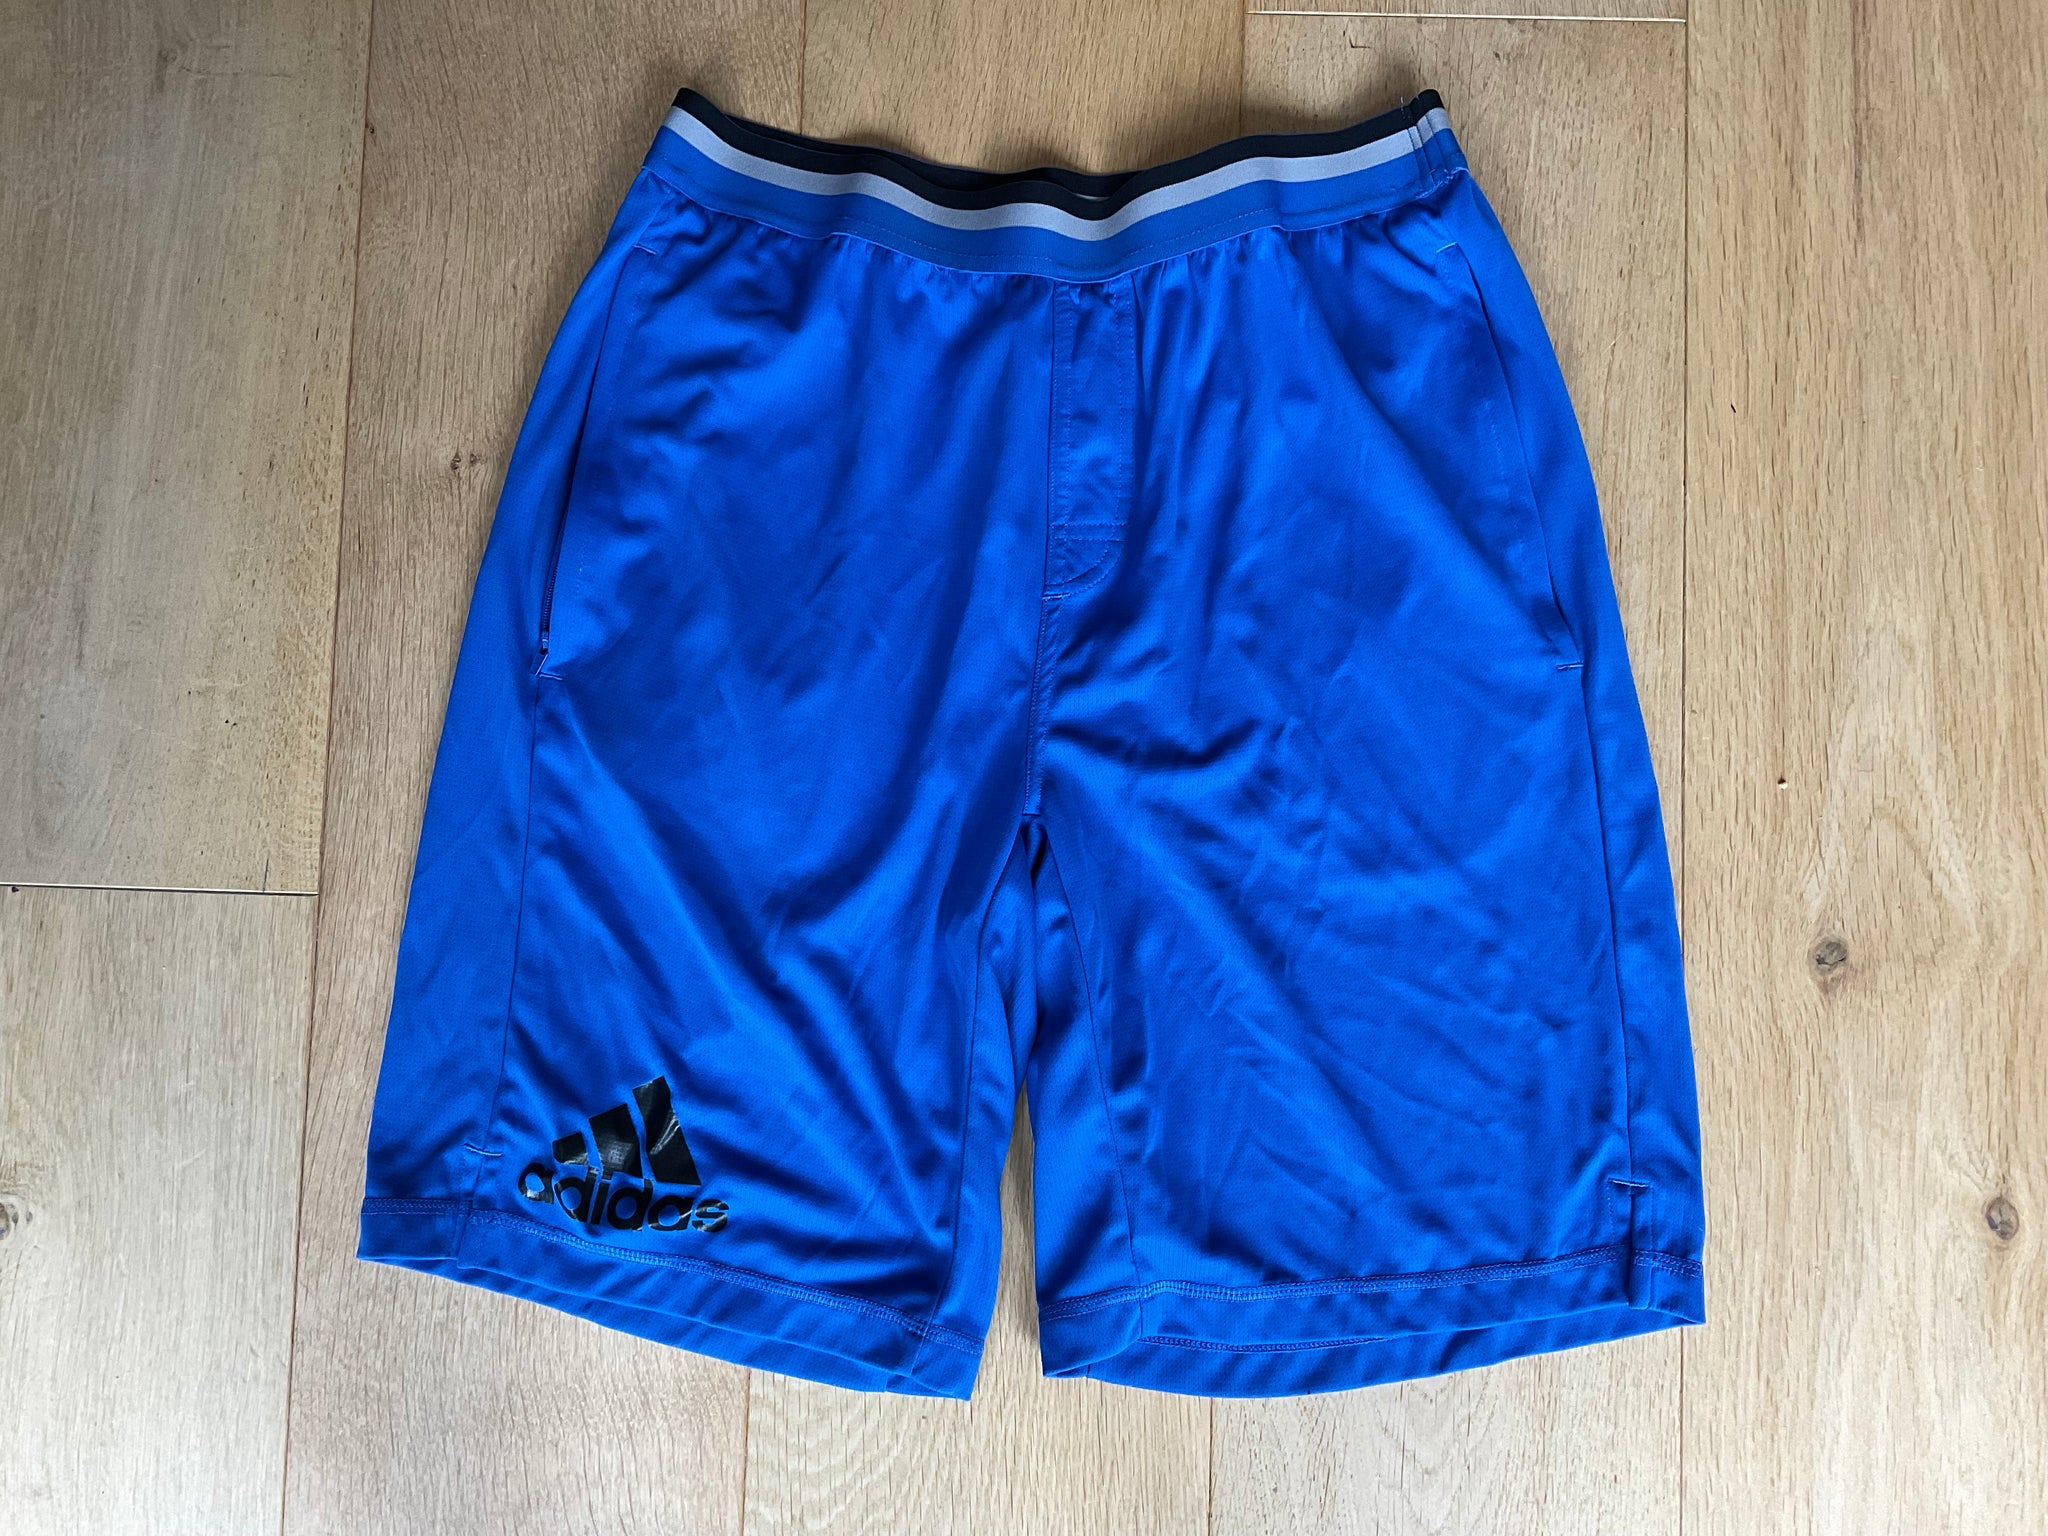 James Grayson - Northampton Saints Adidas Gym Shorts [Blue]